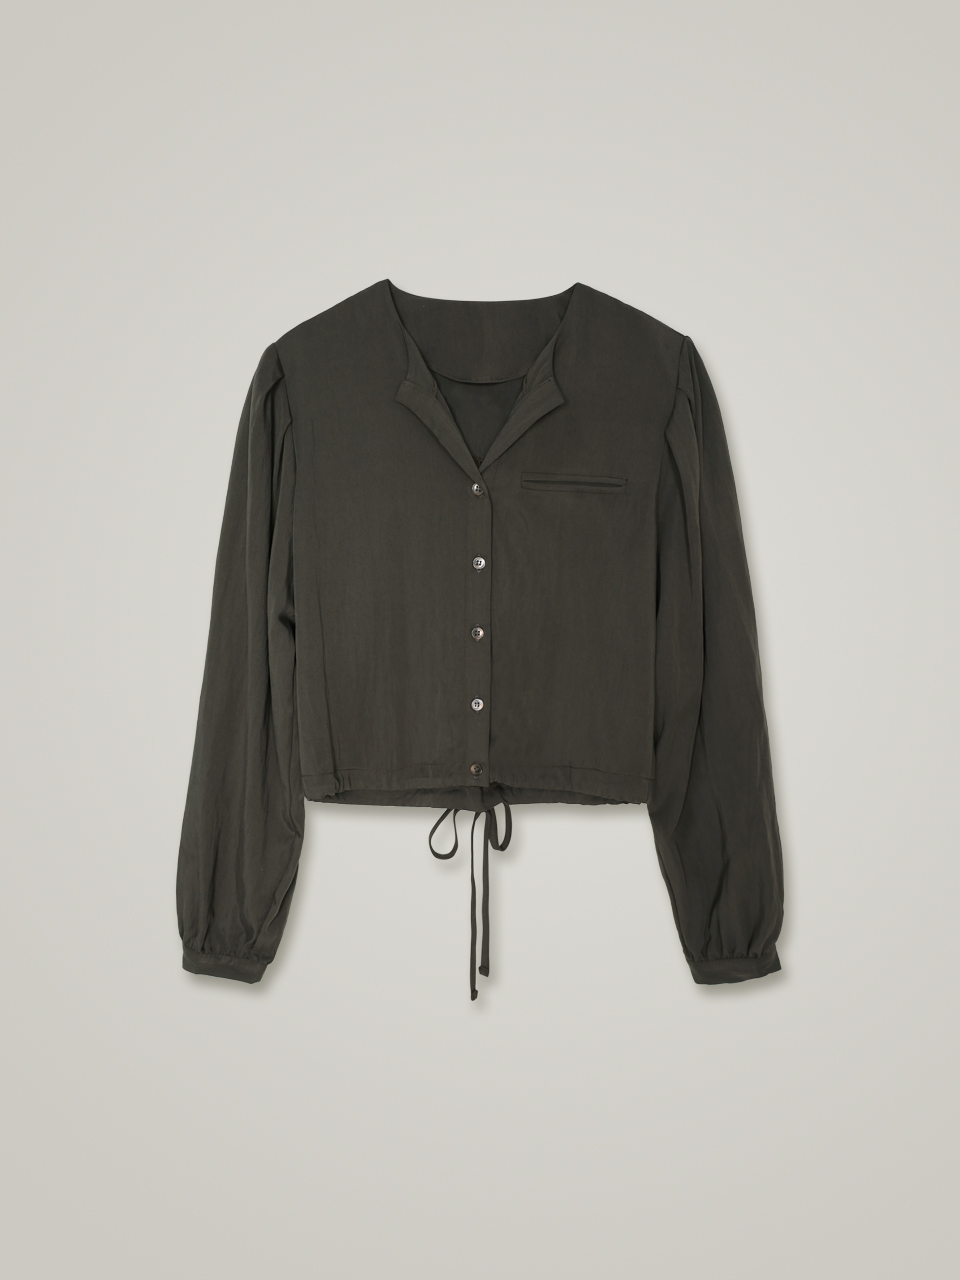 comos 947 string crop blouse (brown)